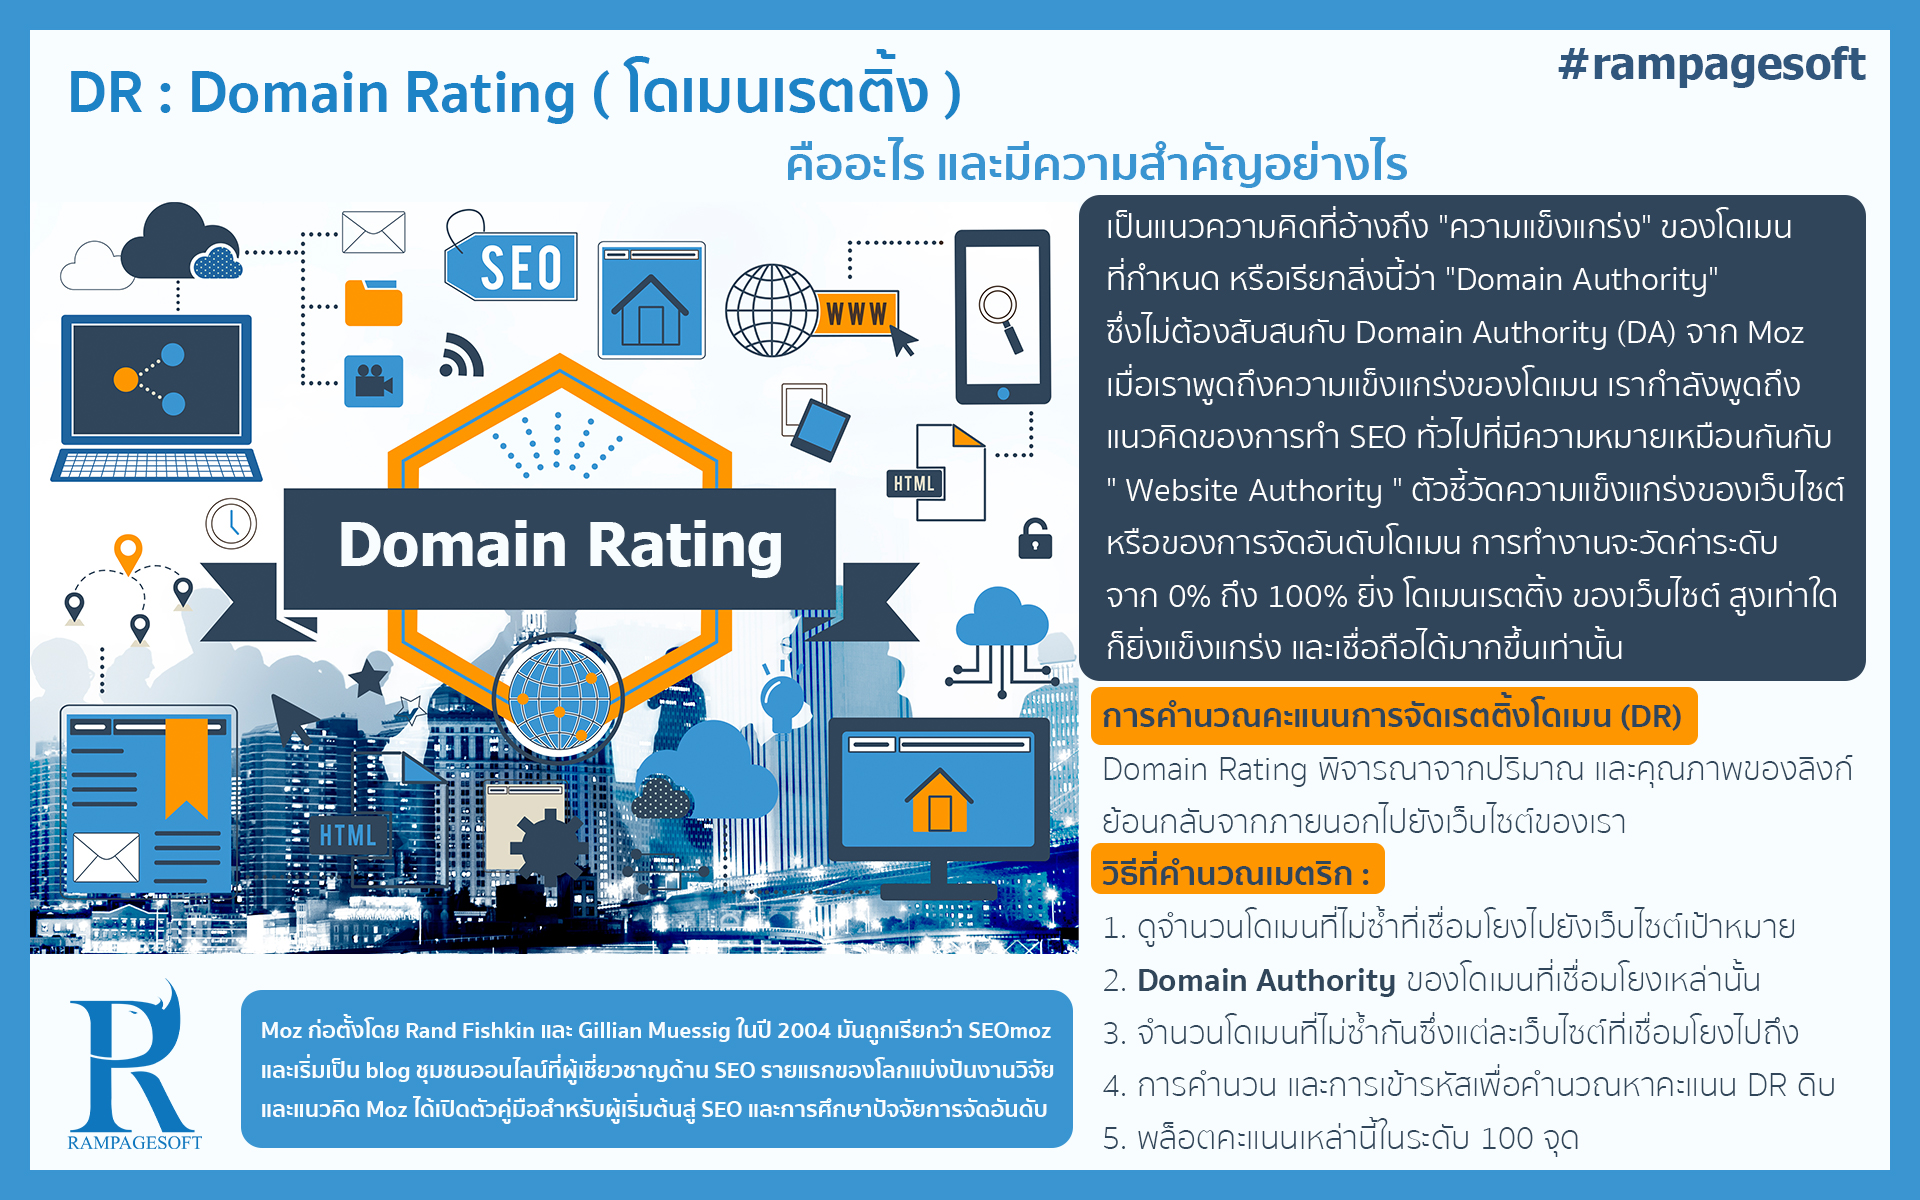 DR : Domain Rating ( โดเมนเรตติ้ง ) บทความ ข่าวสาร rampagesoft